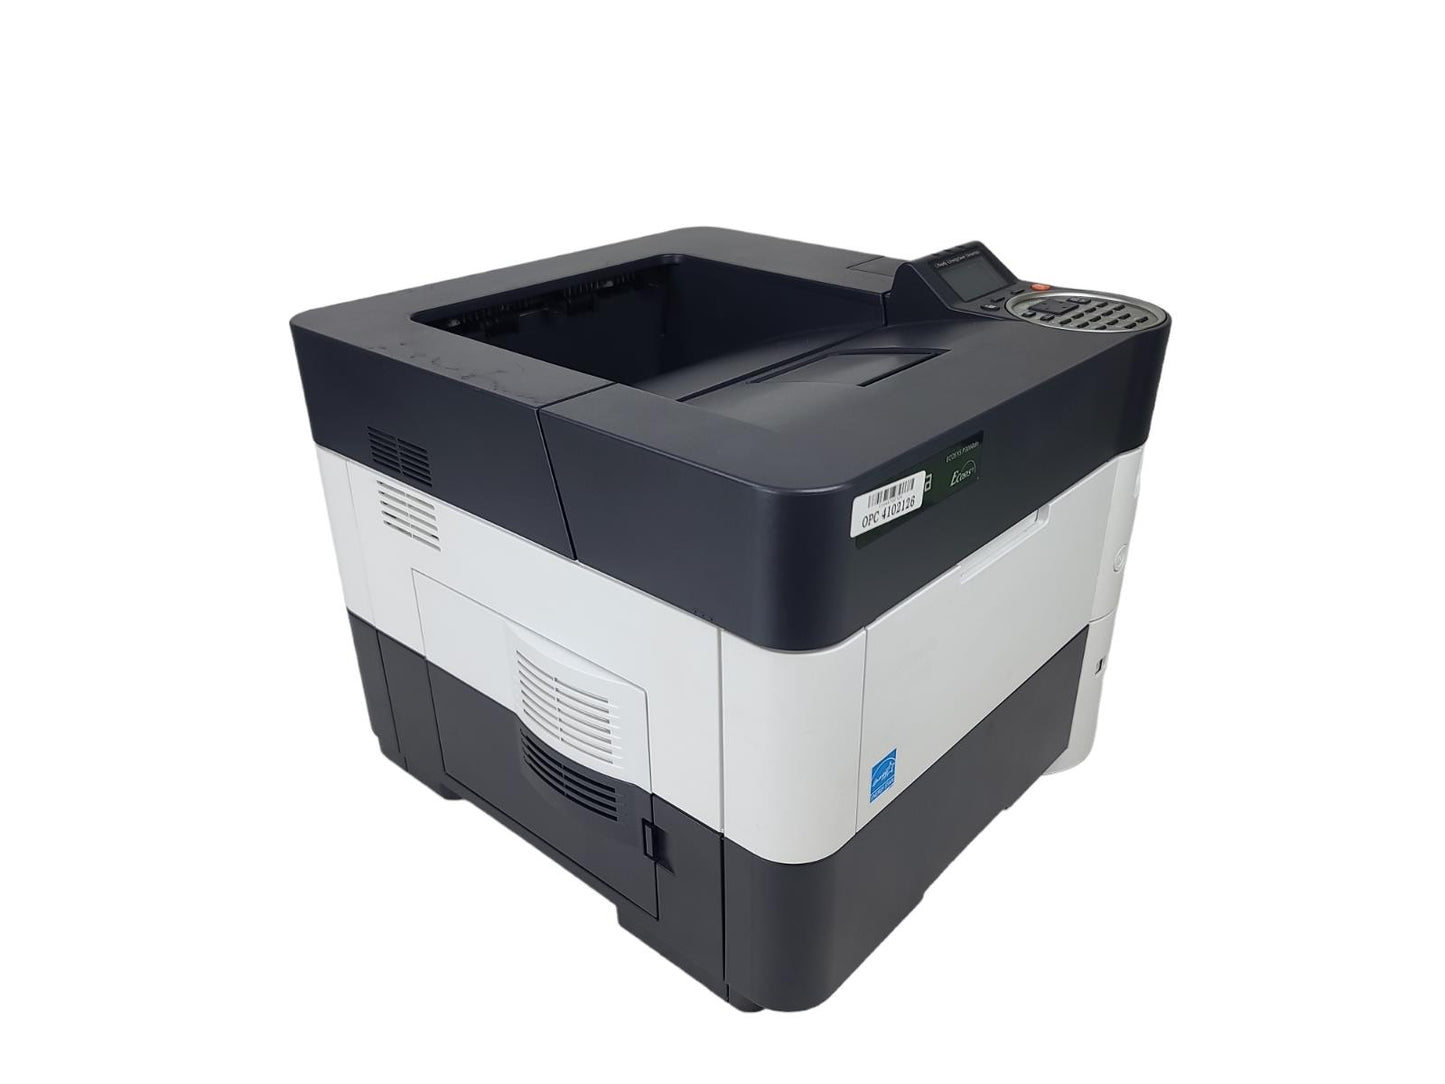 Kyocera Ecosys P3060dn Laser Printer